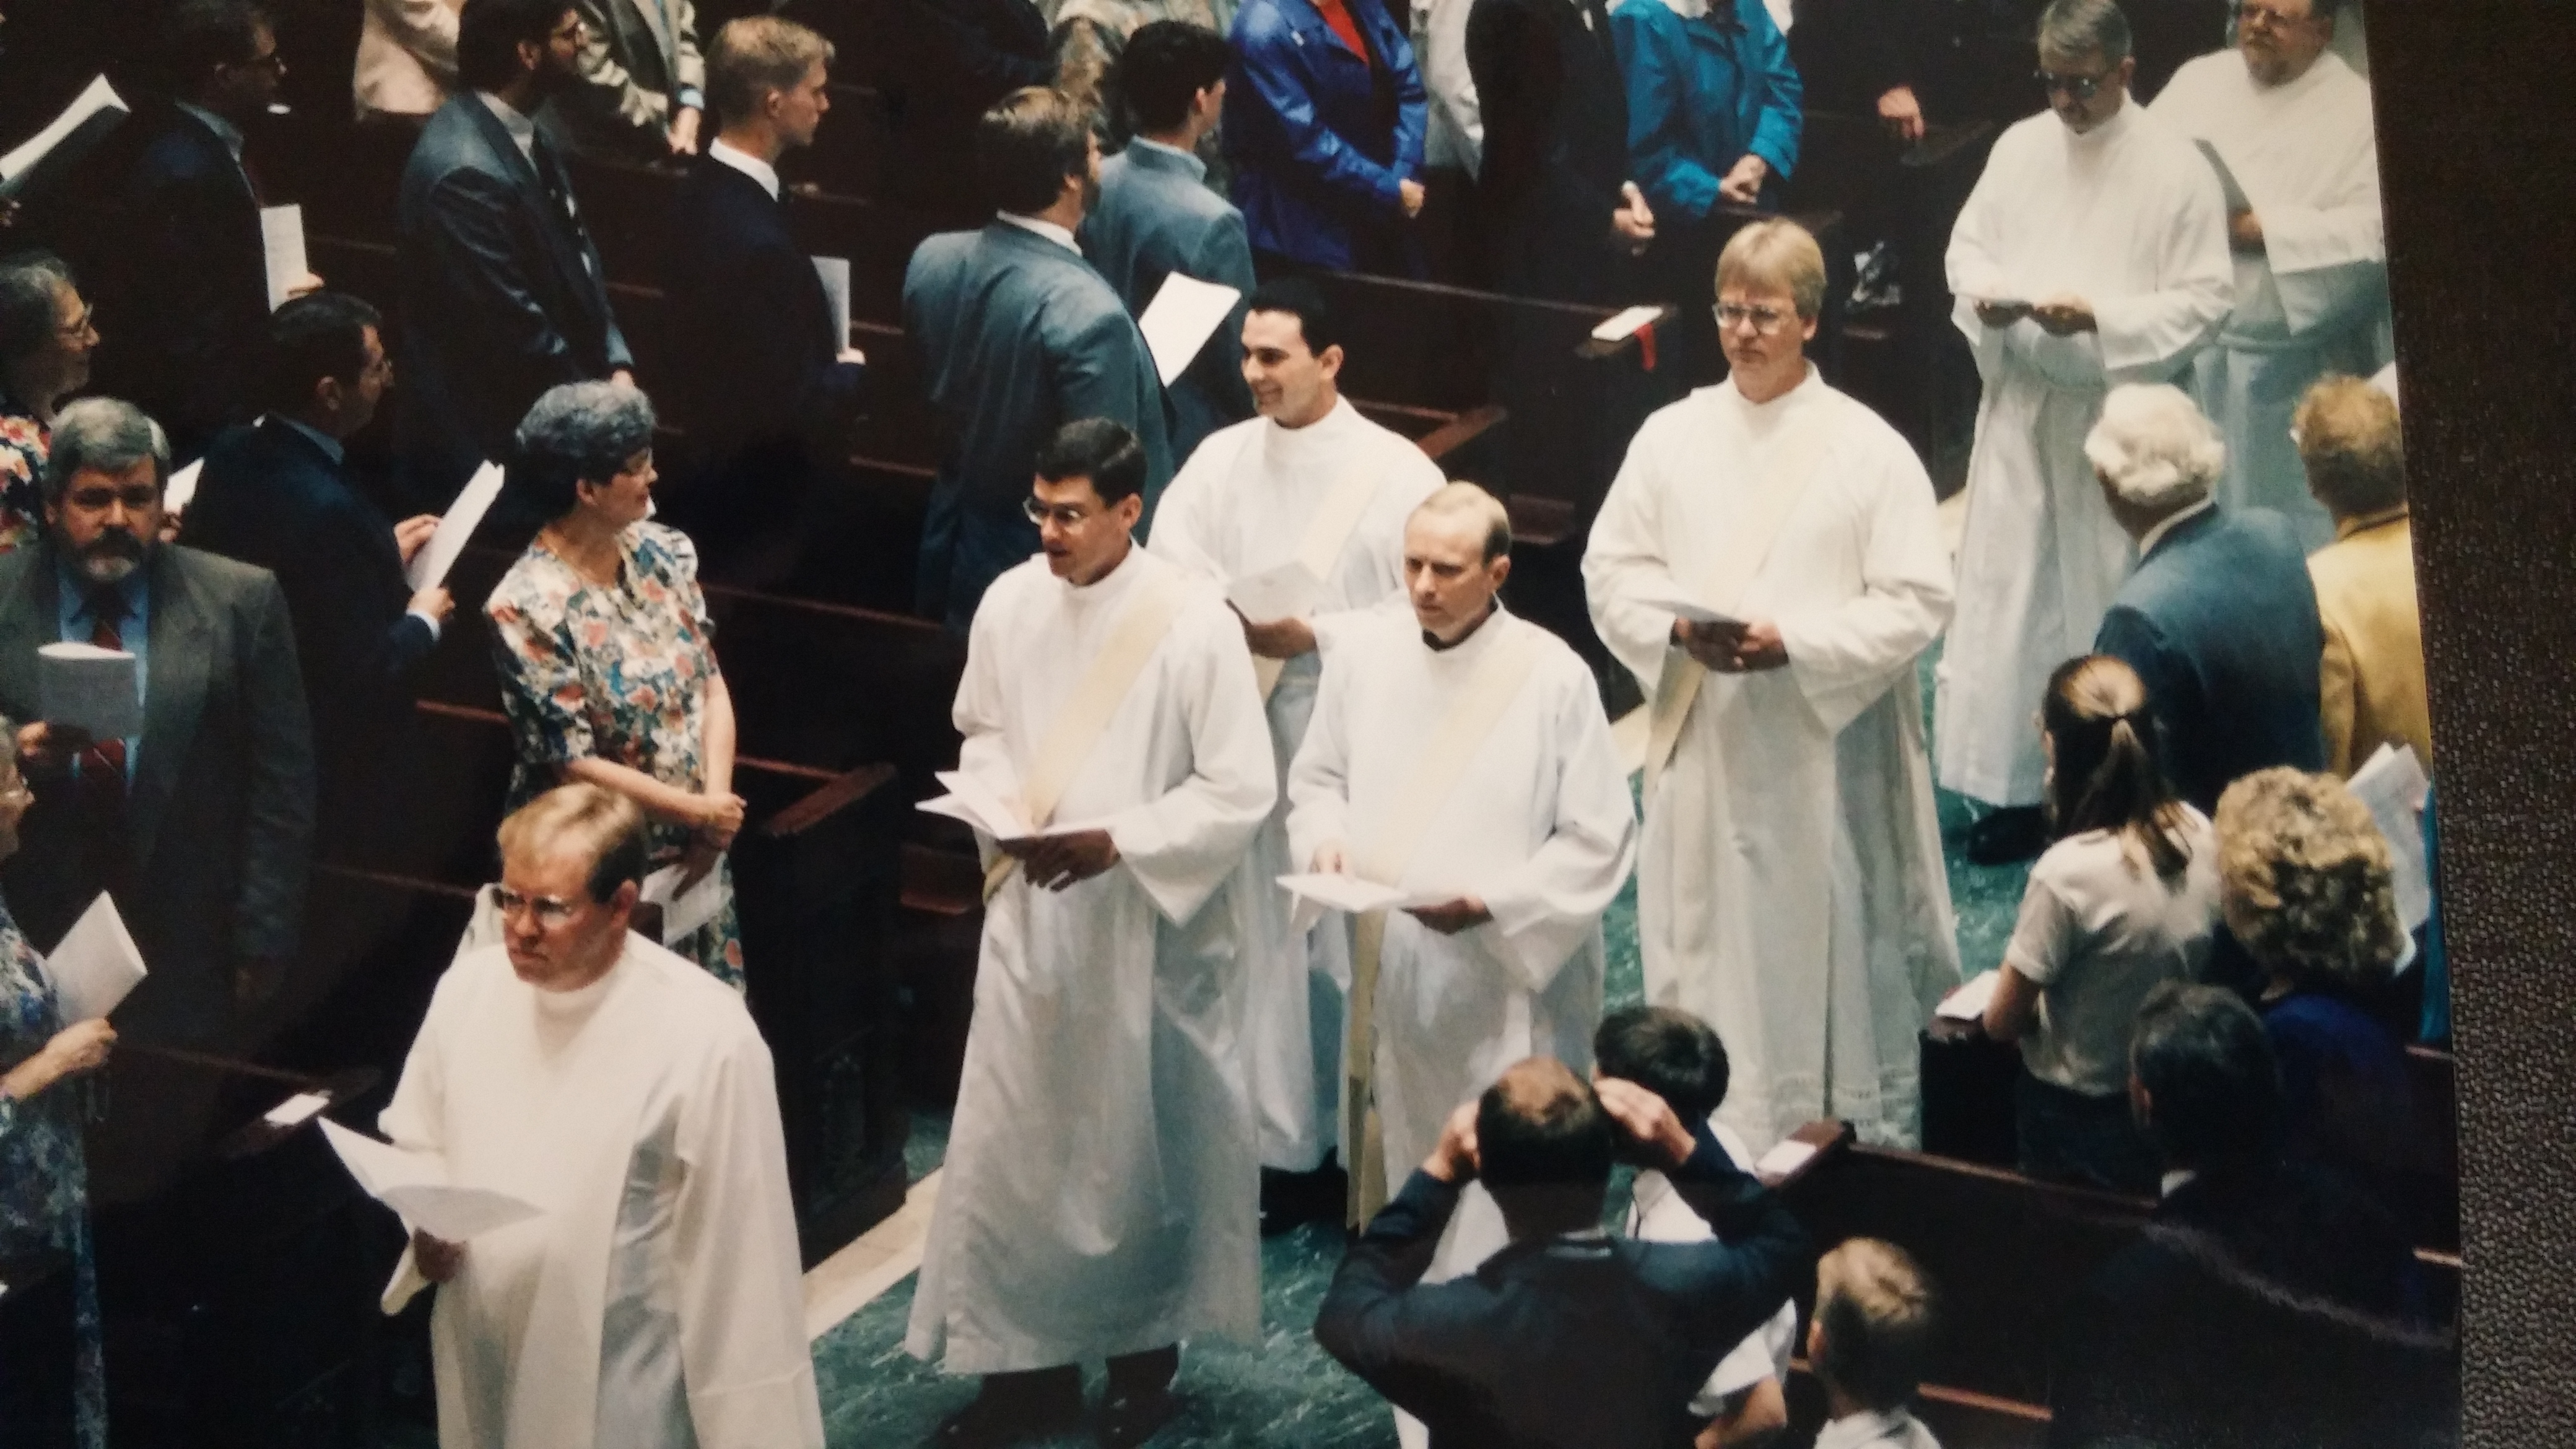 Deacons Piepmeyer, Sloneker, & Meyers prepare for Ordination